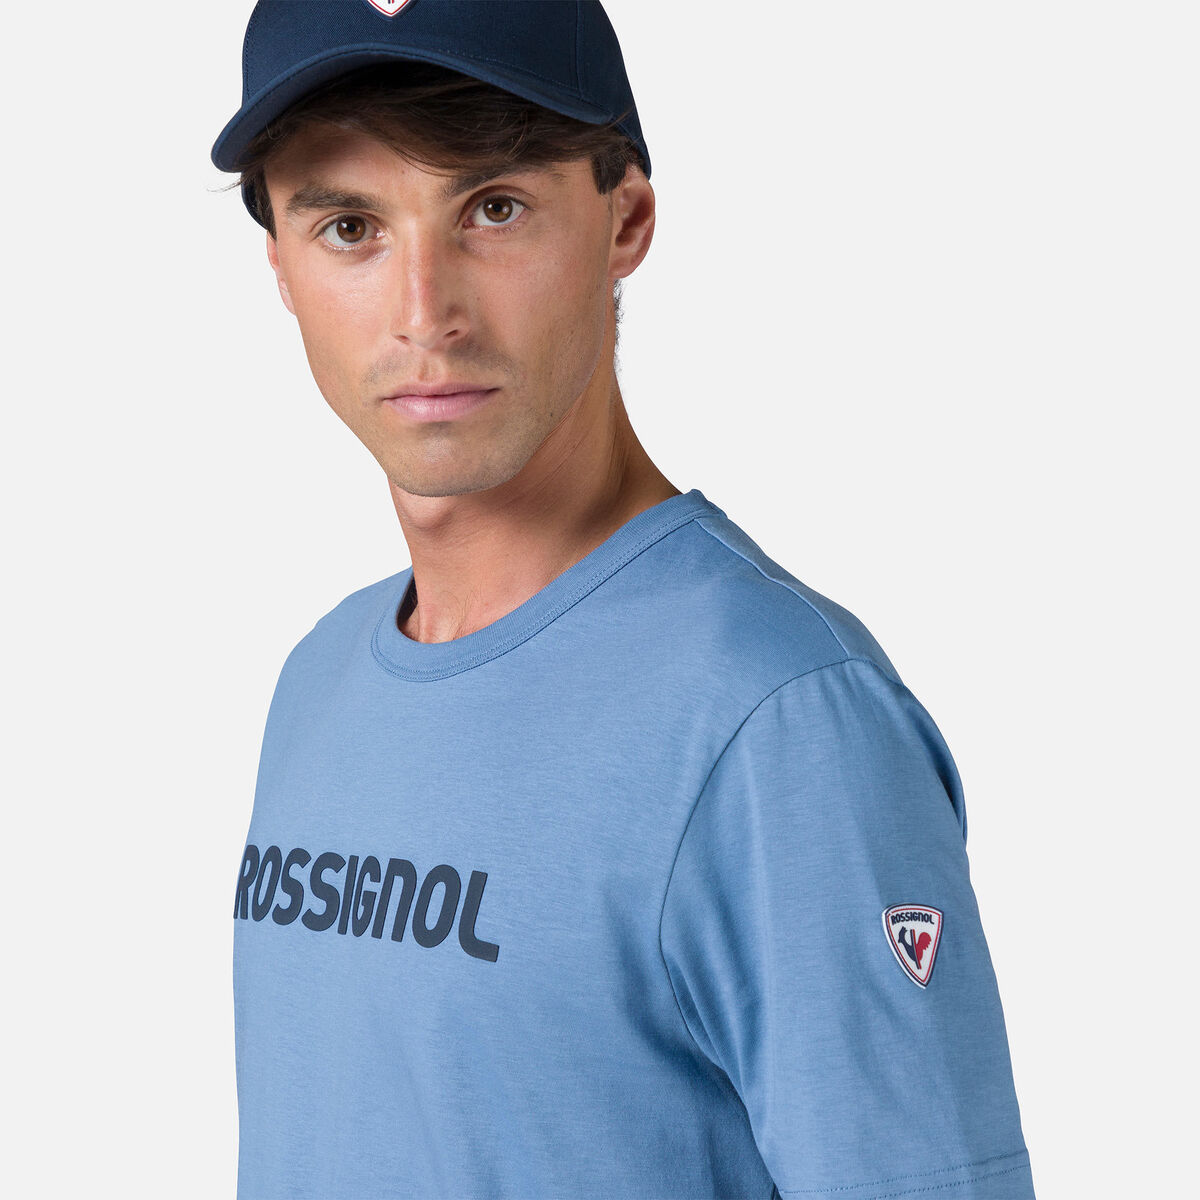 Rossignol T-shirt uomo Rossignol blue